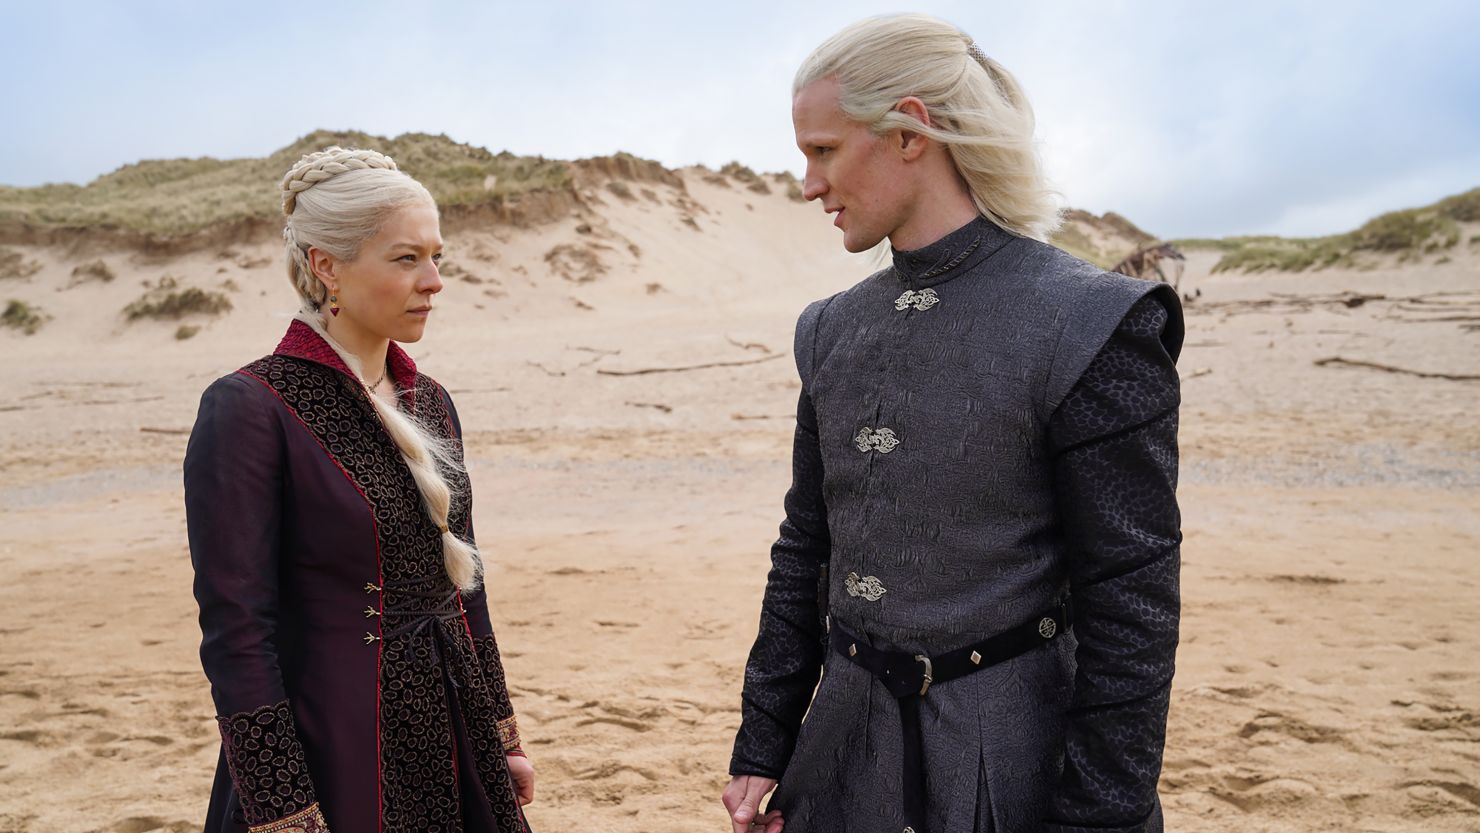 Emma D'Arcy as Rhaenyra Targaryen and Matt Smith as Daemon Targaryen discuss their bleach-and-tone routines in HBO's new "House of the Dragon."